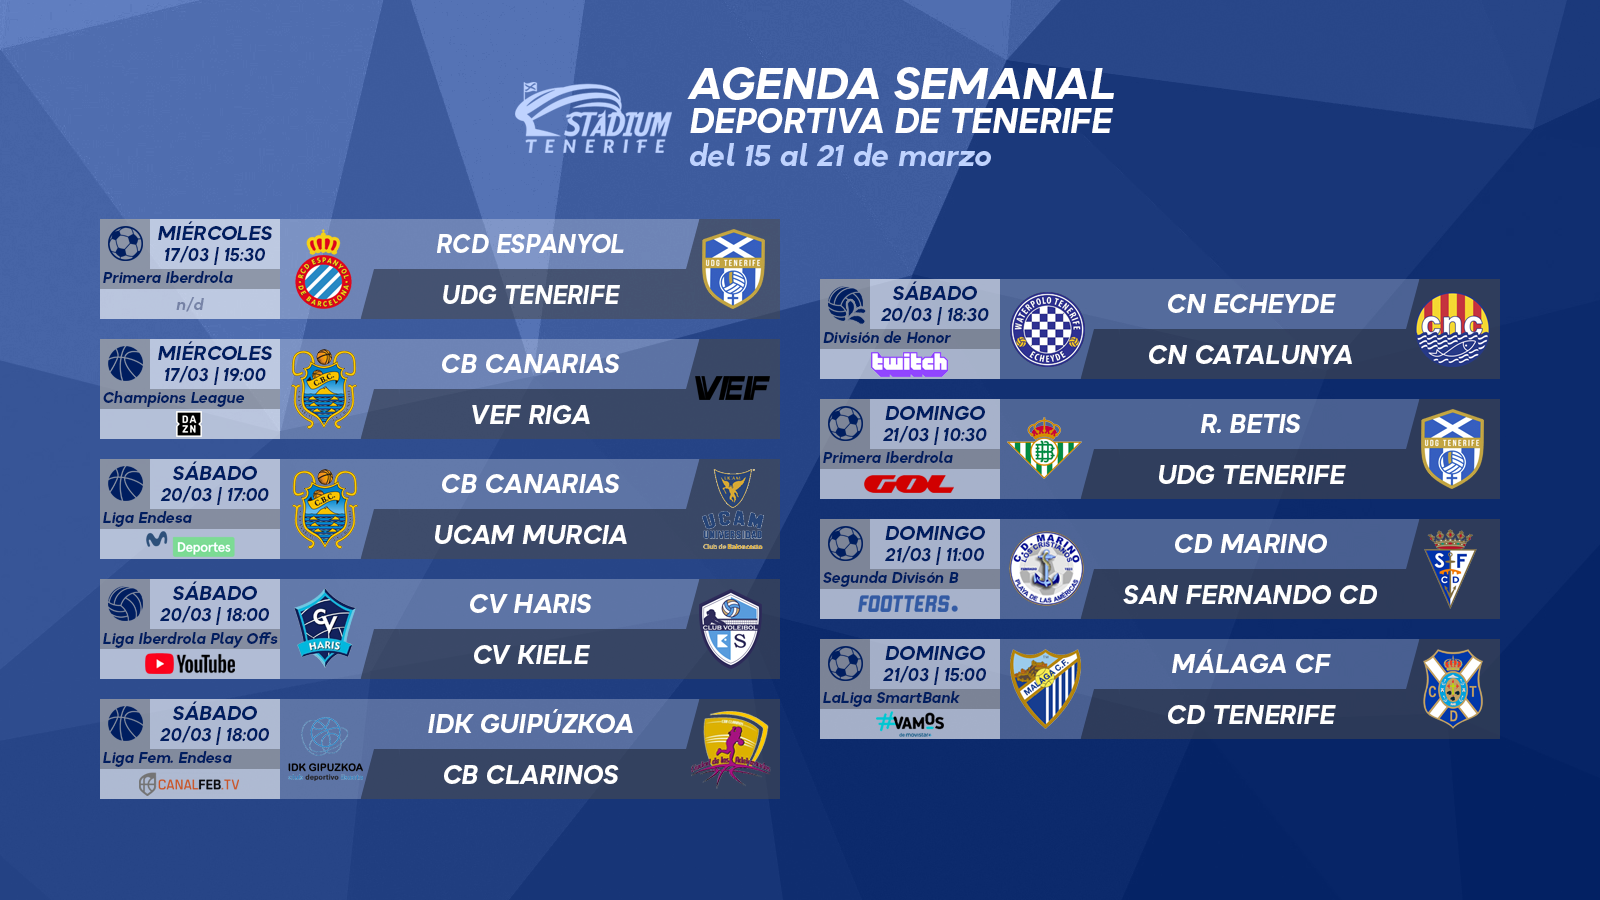 Agenda Semanal Deportiva de Tenerife (15 al 21 de marzo)